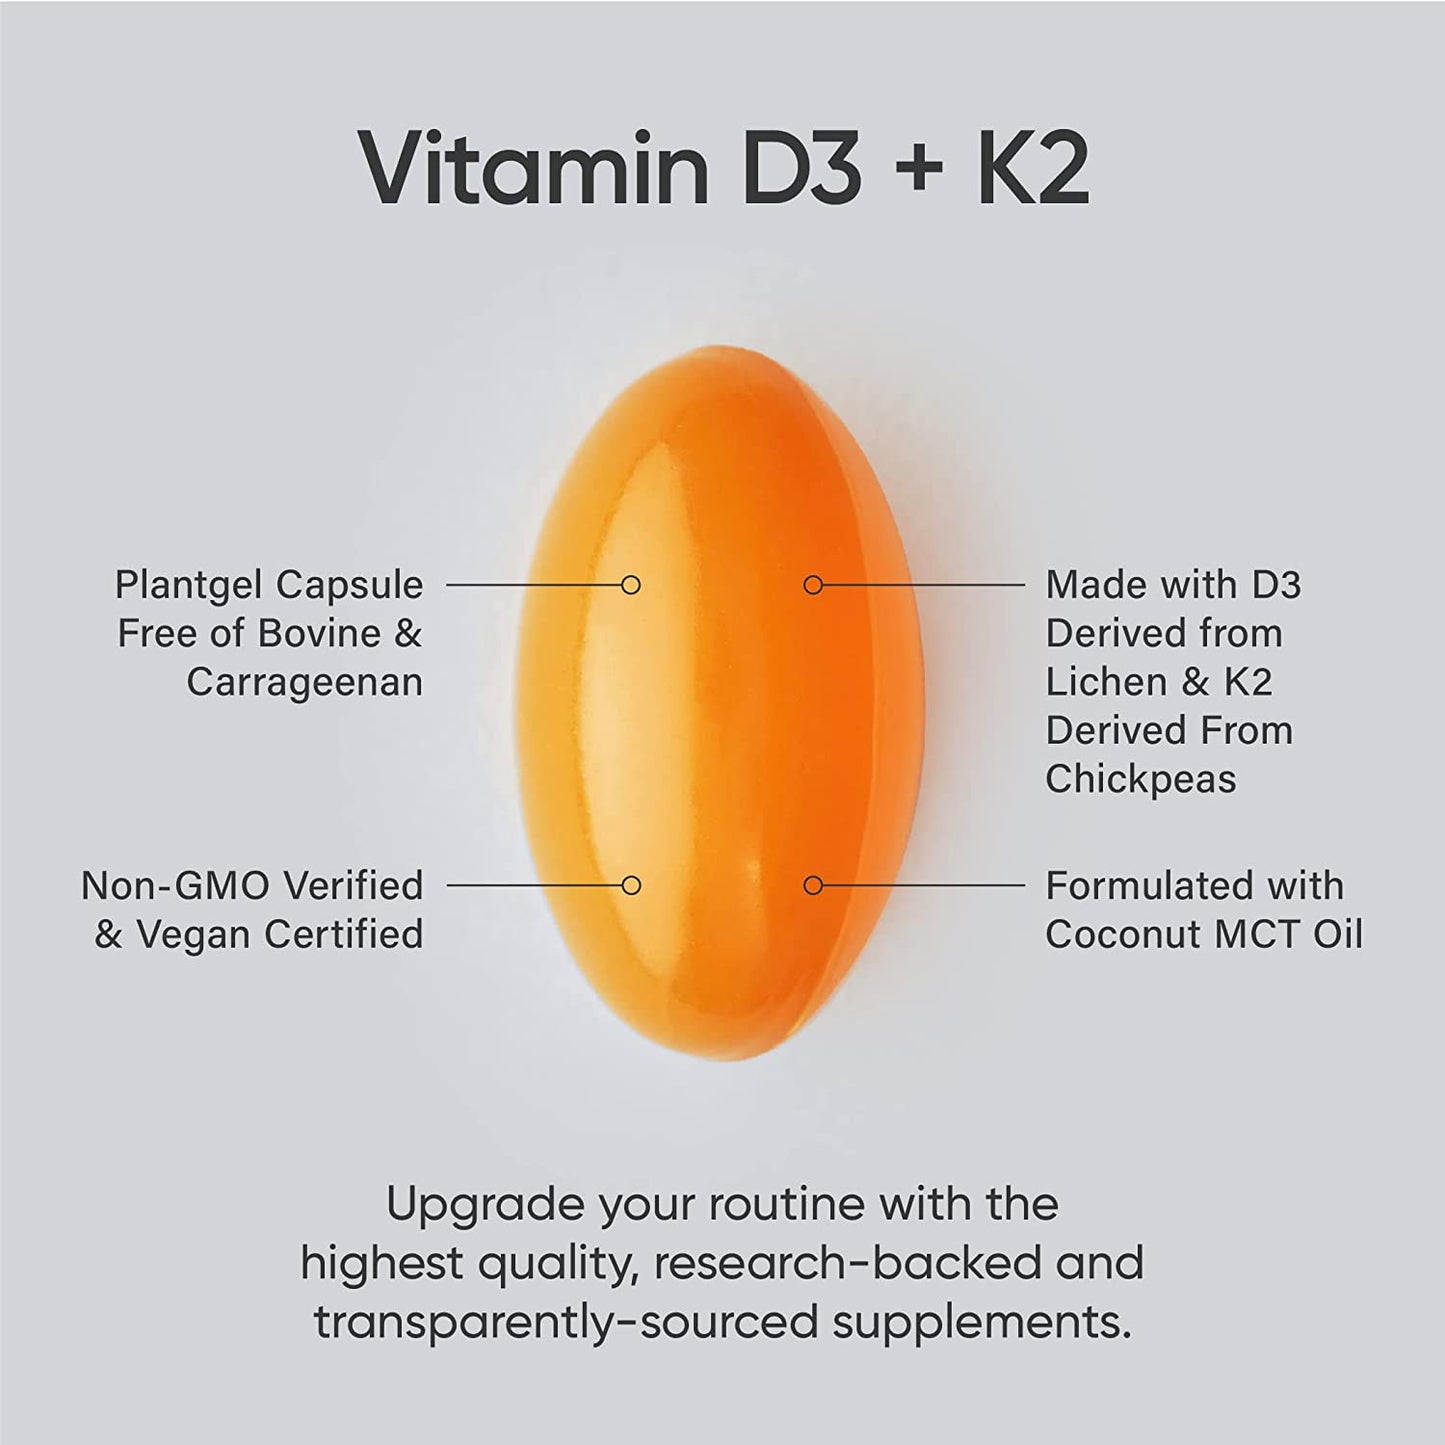 Sports Research Vitamin D3 + K2